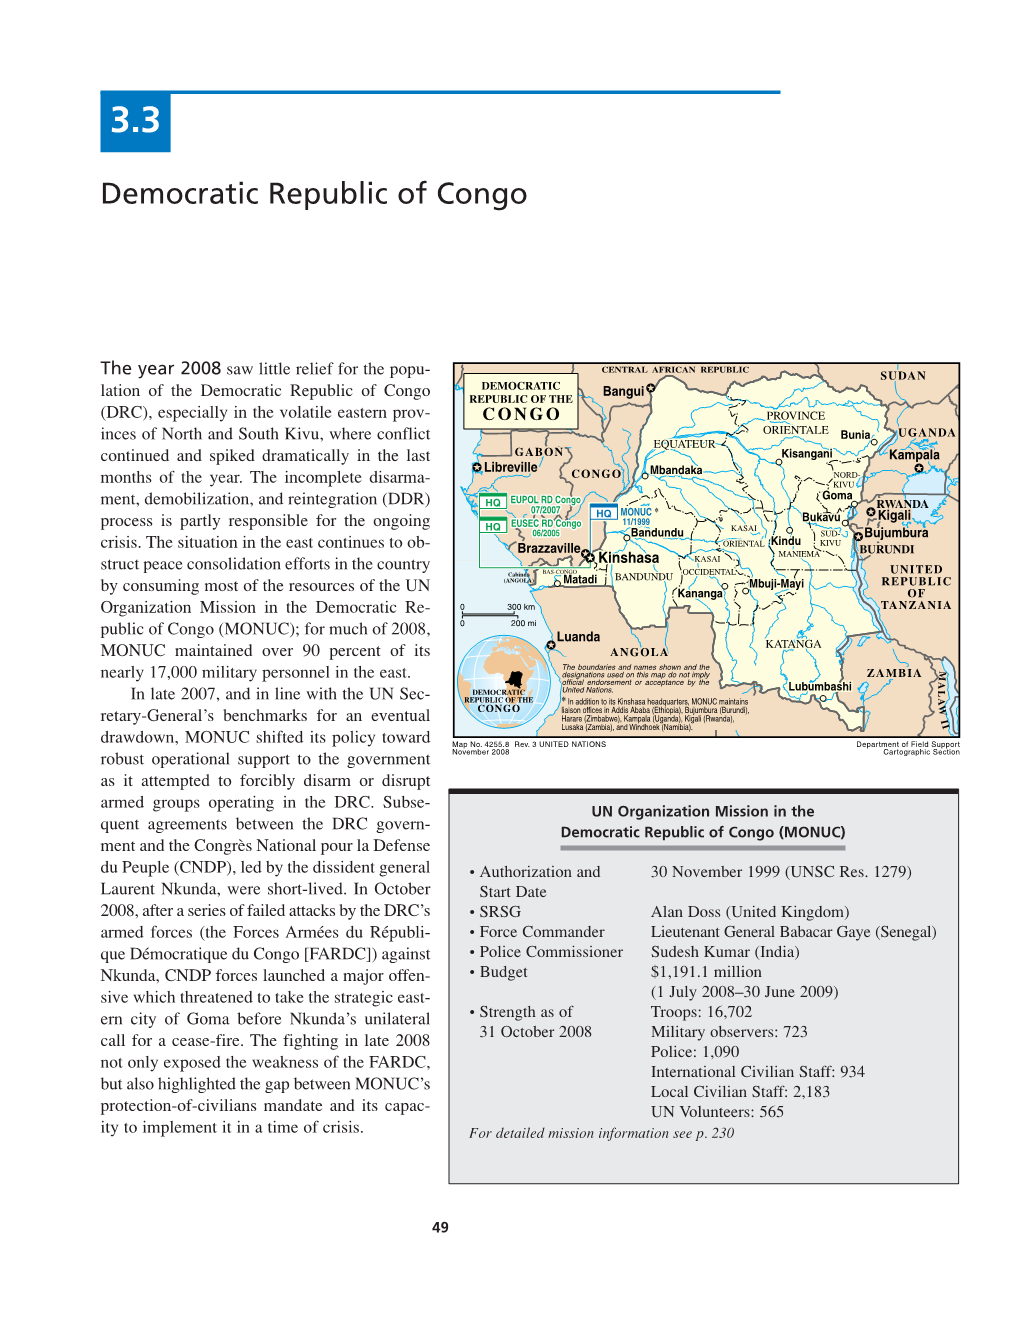 Democratic Republic of Congo Mission Review